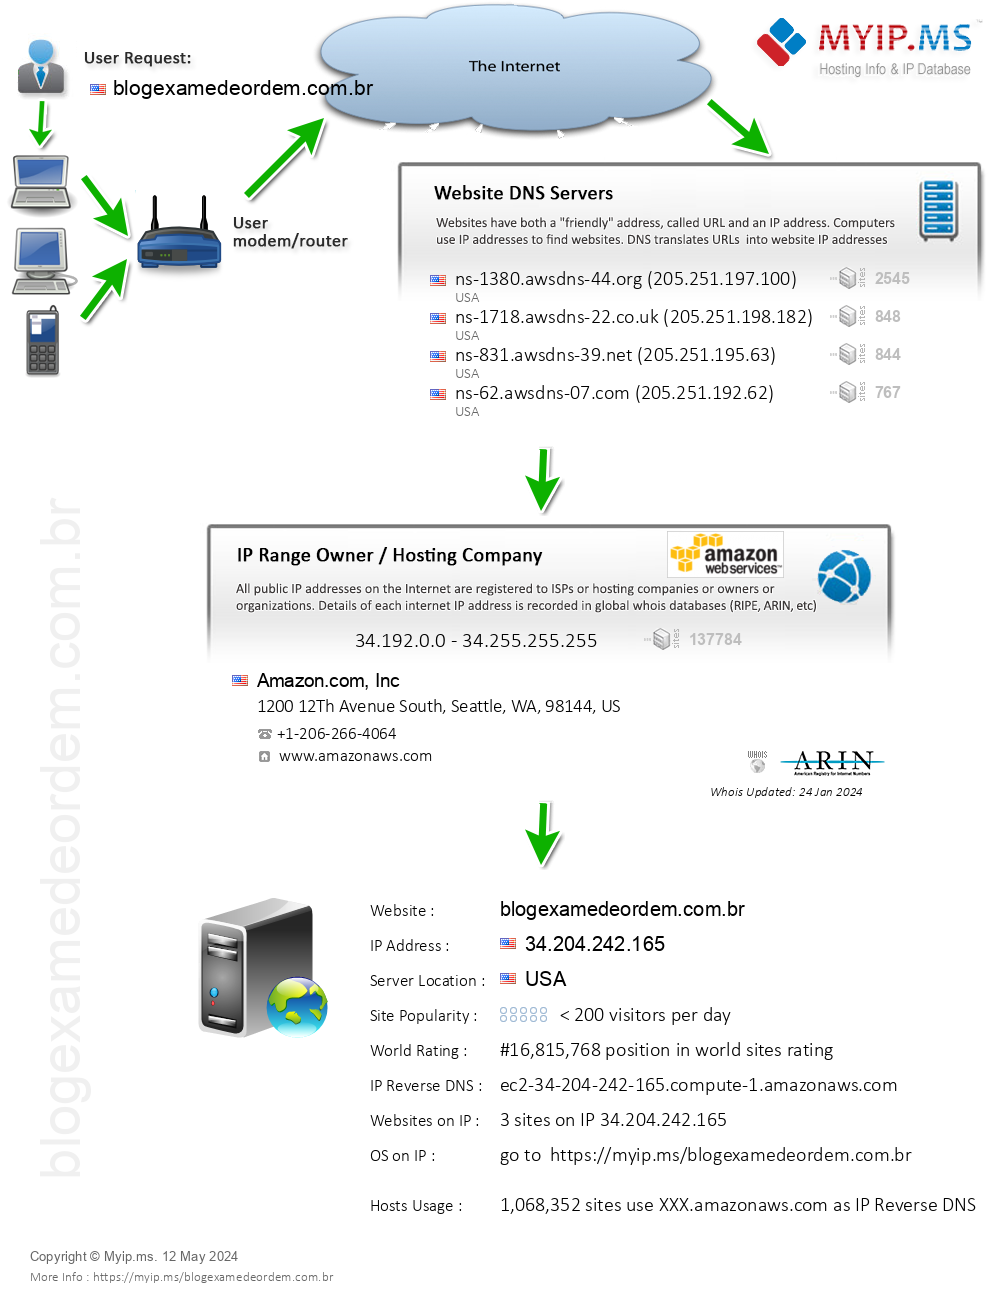 Blogexamedeordem.com.br - Website Hosting Visual IP Diagram